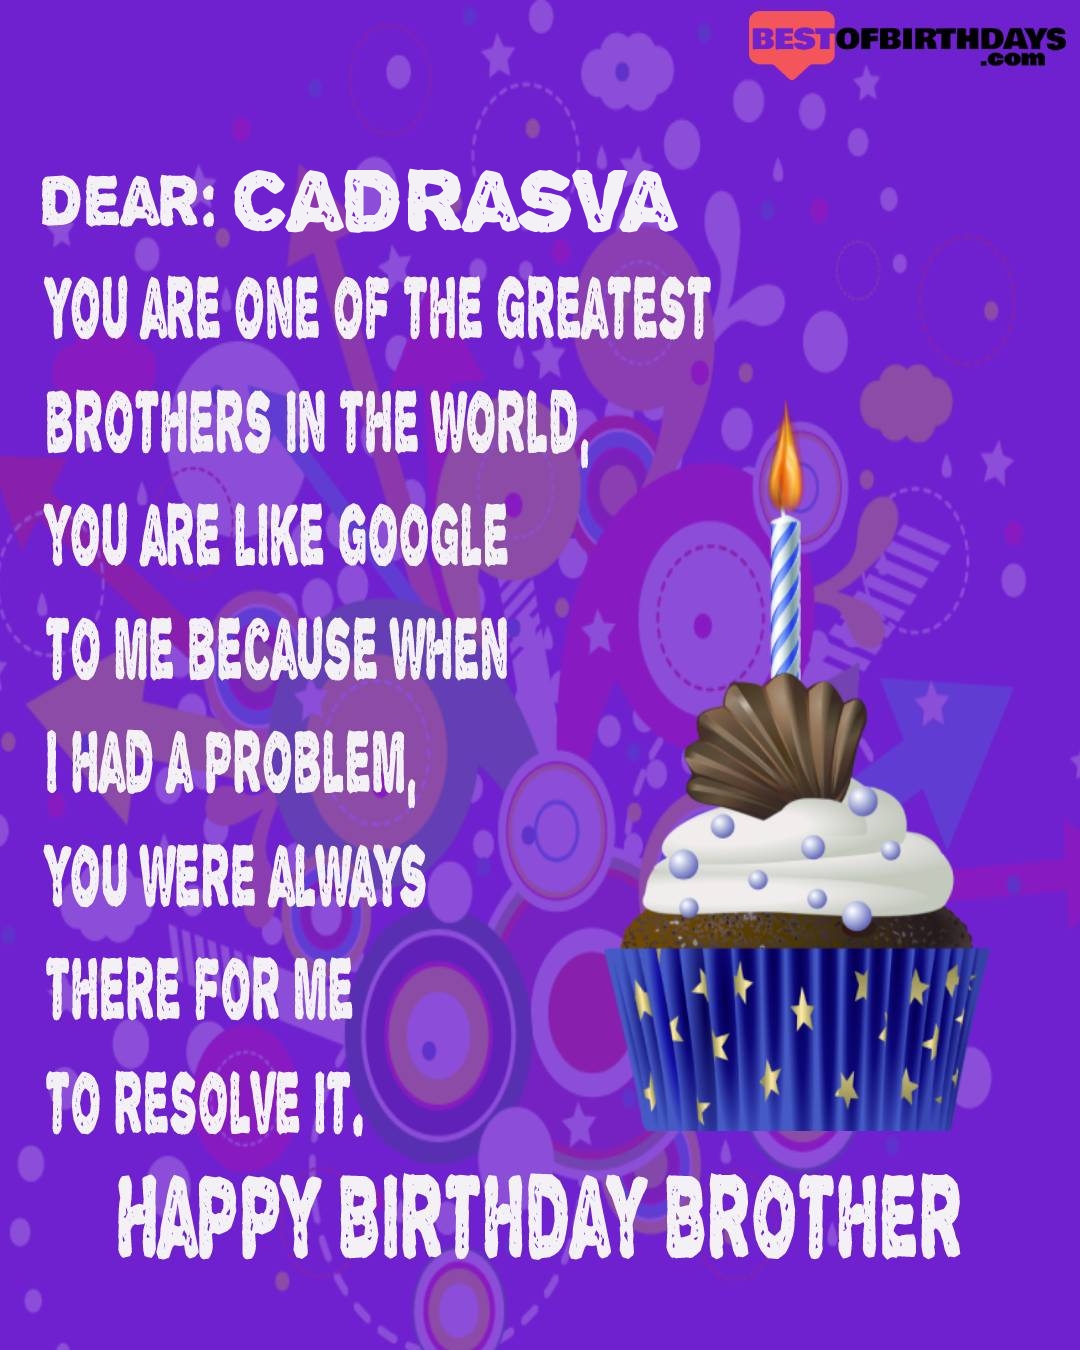 Happy birthday cadrasva bhai brother bro